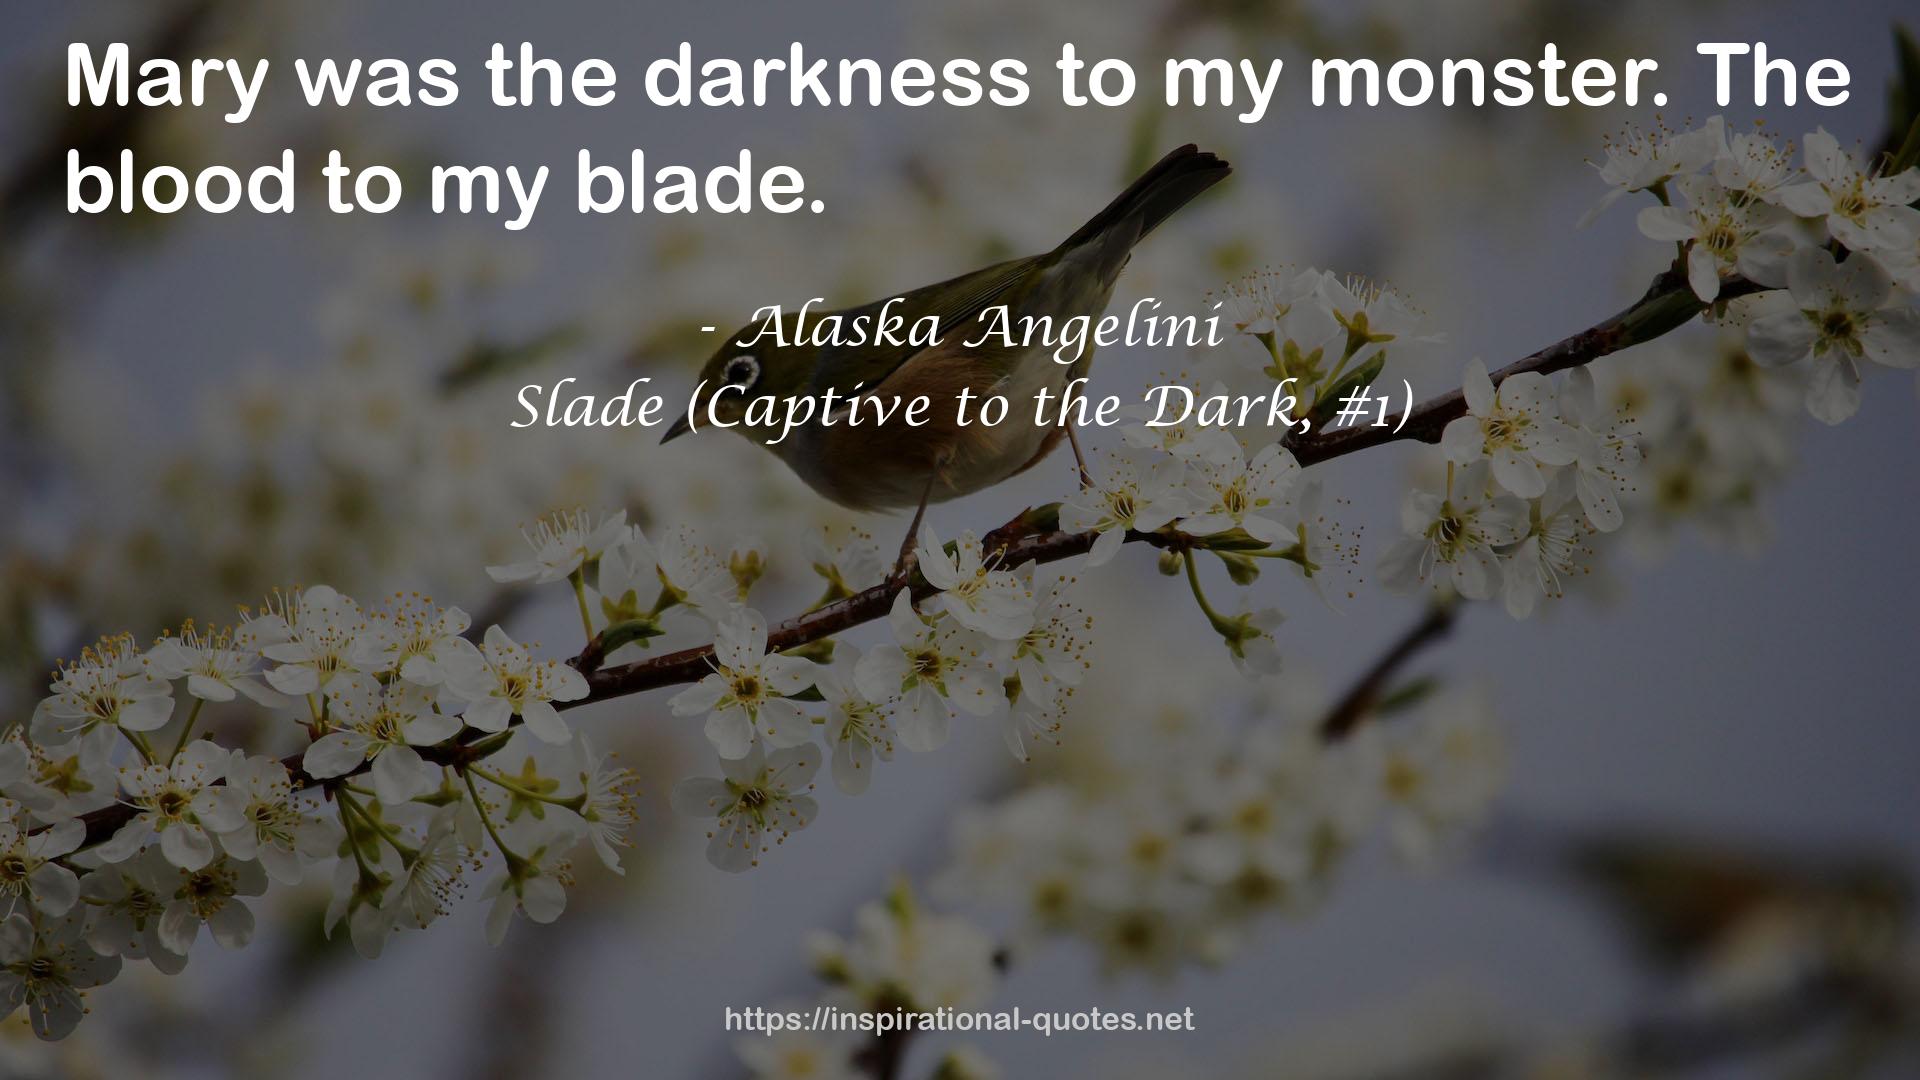 Slade (Captive to the Dark, #1) QUOTES